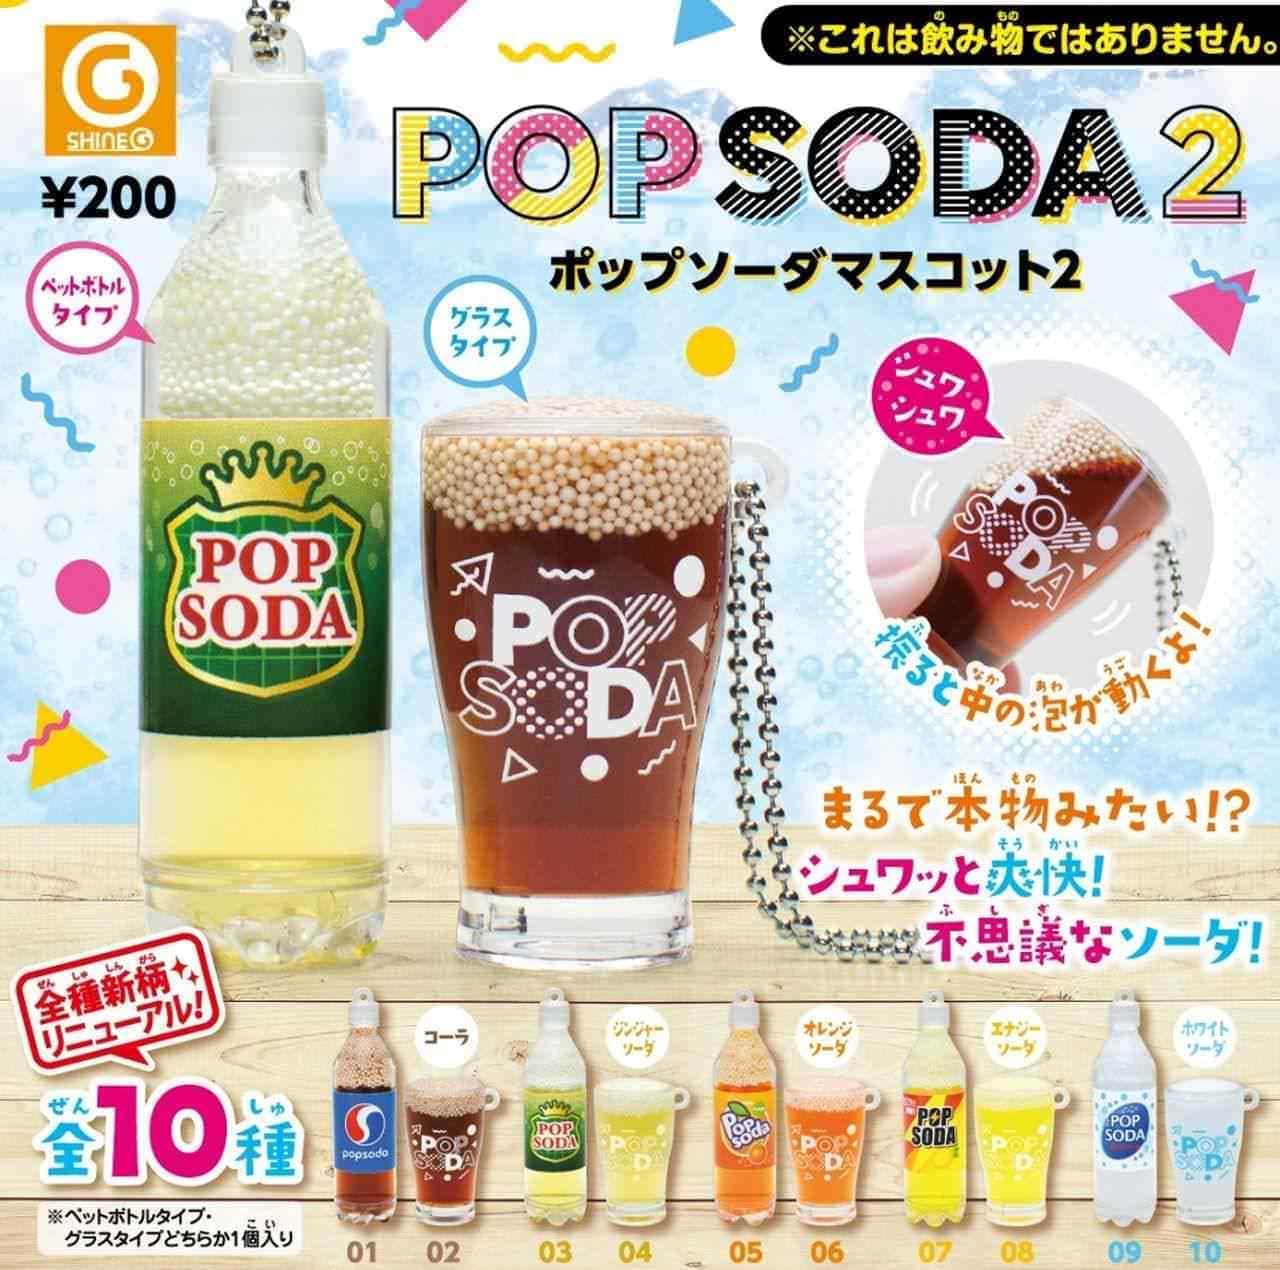 Capsule toy "Pop Soda Mascot 2"